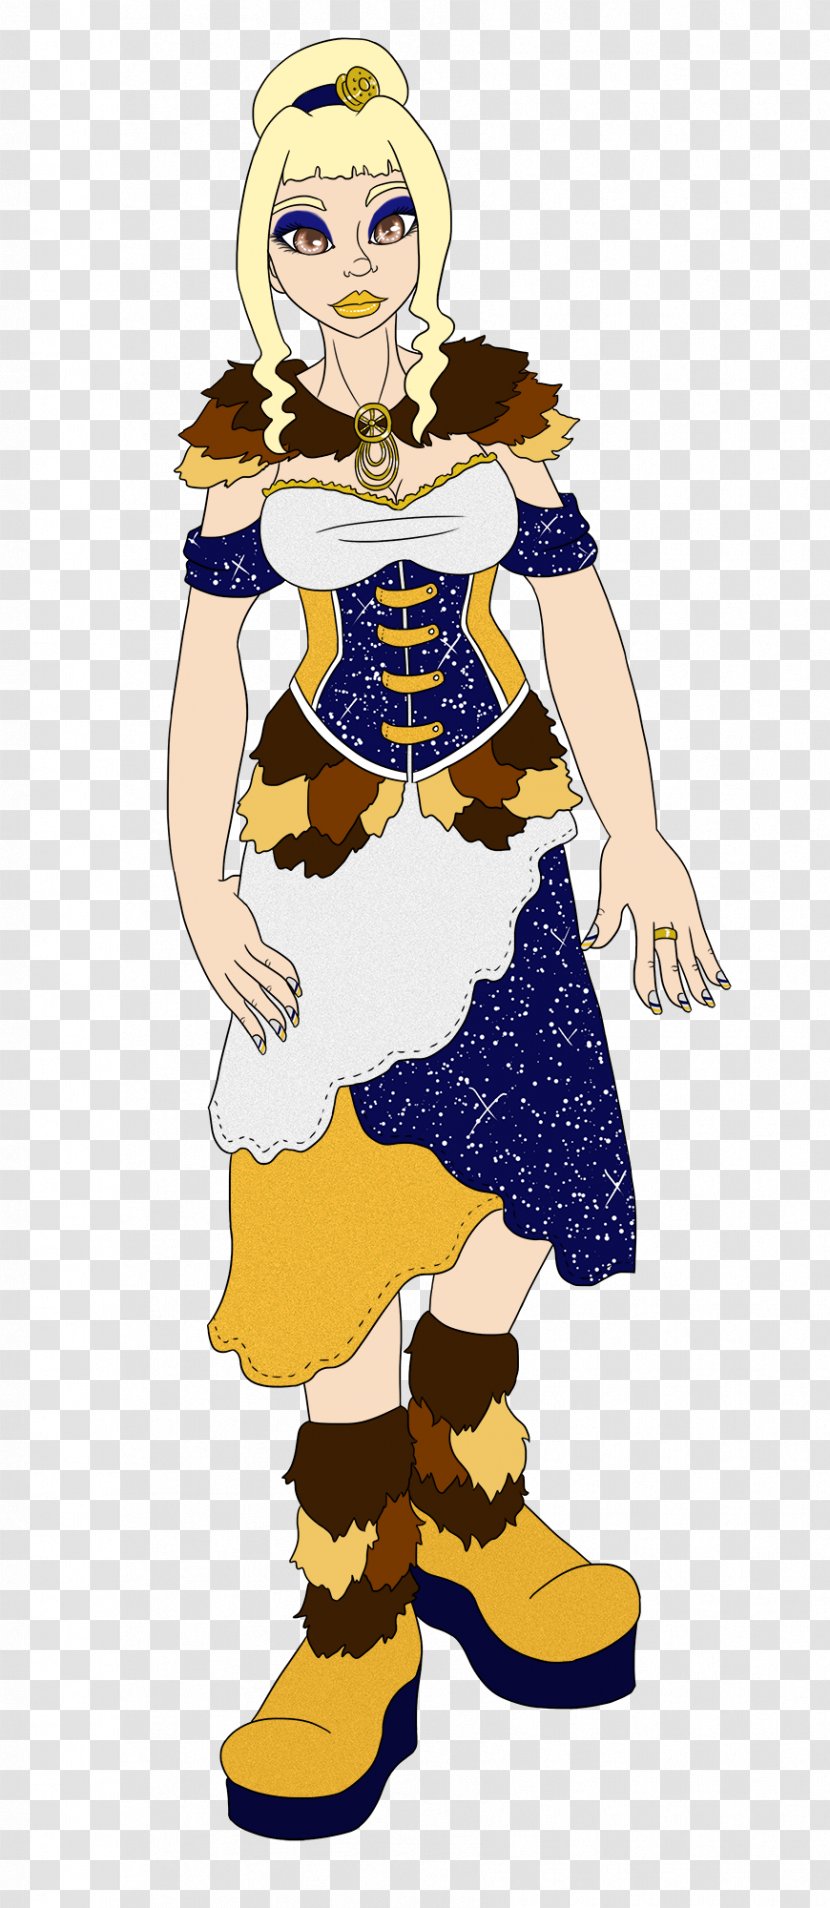 Costume Illustration Cartoon Mascot Human - Ever After High Raven Queen Transparent PNG